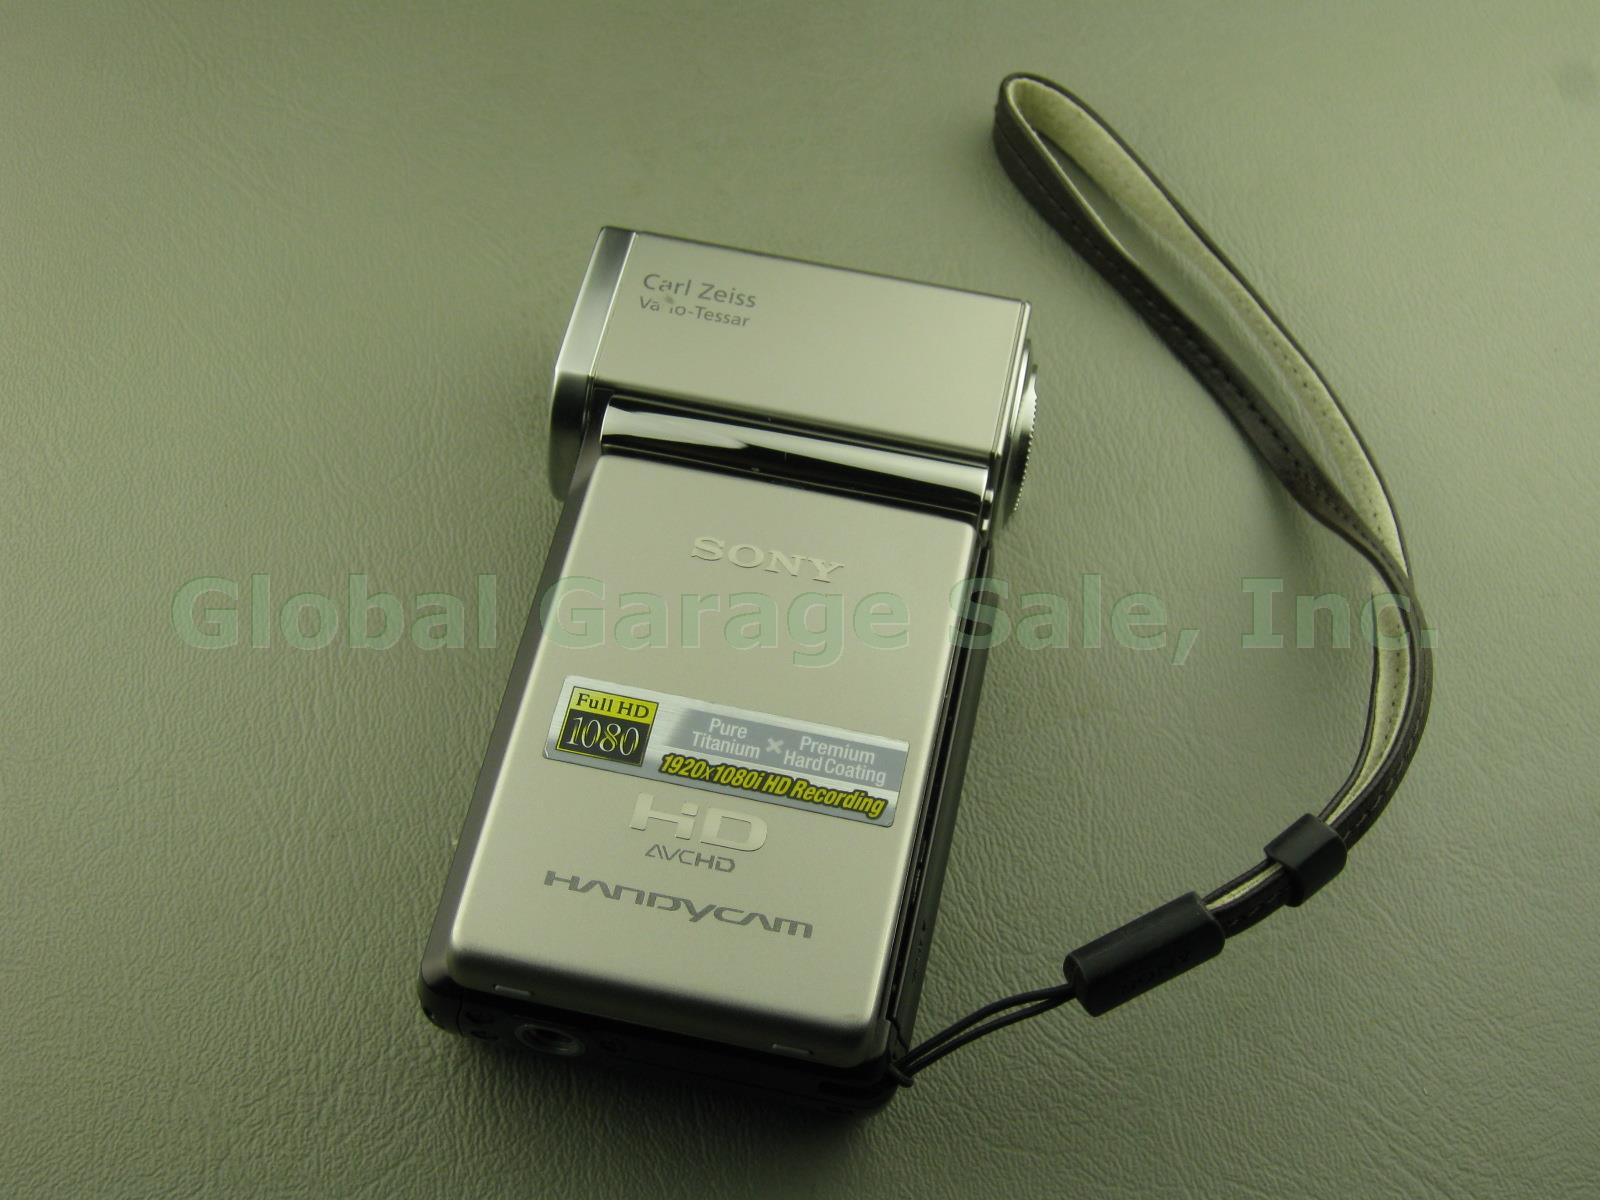 Sony Handycam HDR-TG1 Full HD 1080 Camcorder Video Camera Case Box Bundle Lot NR 3